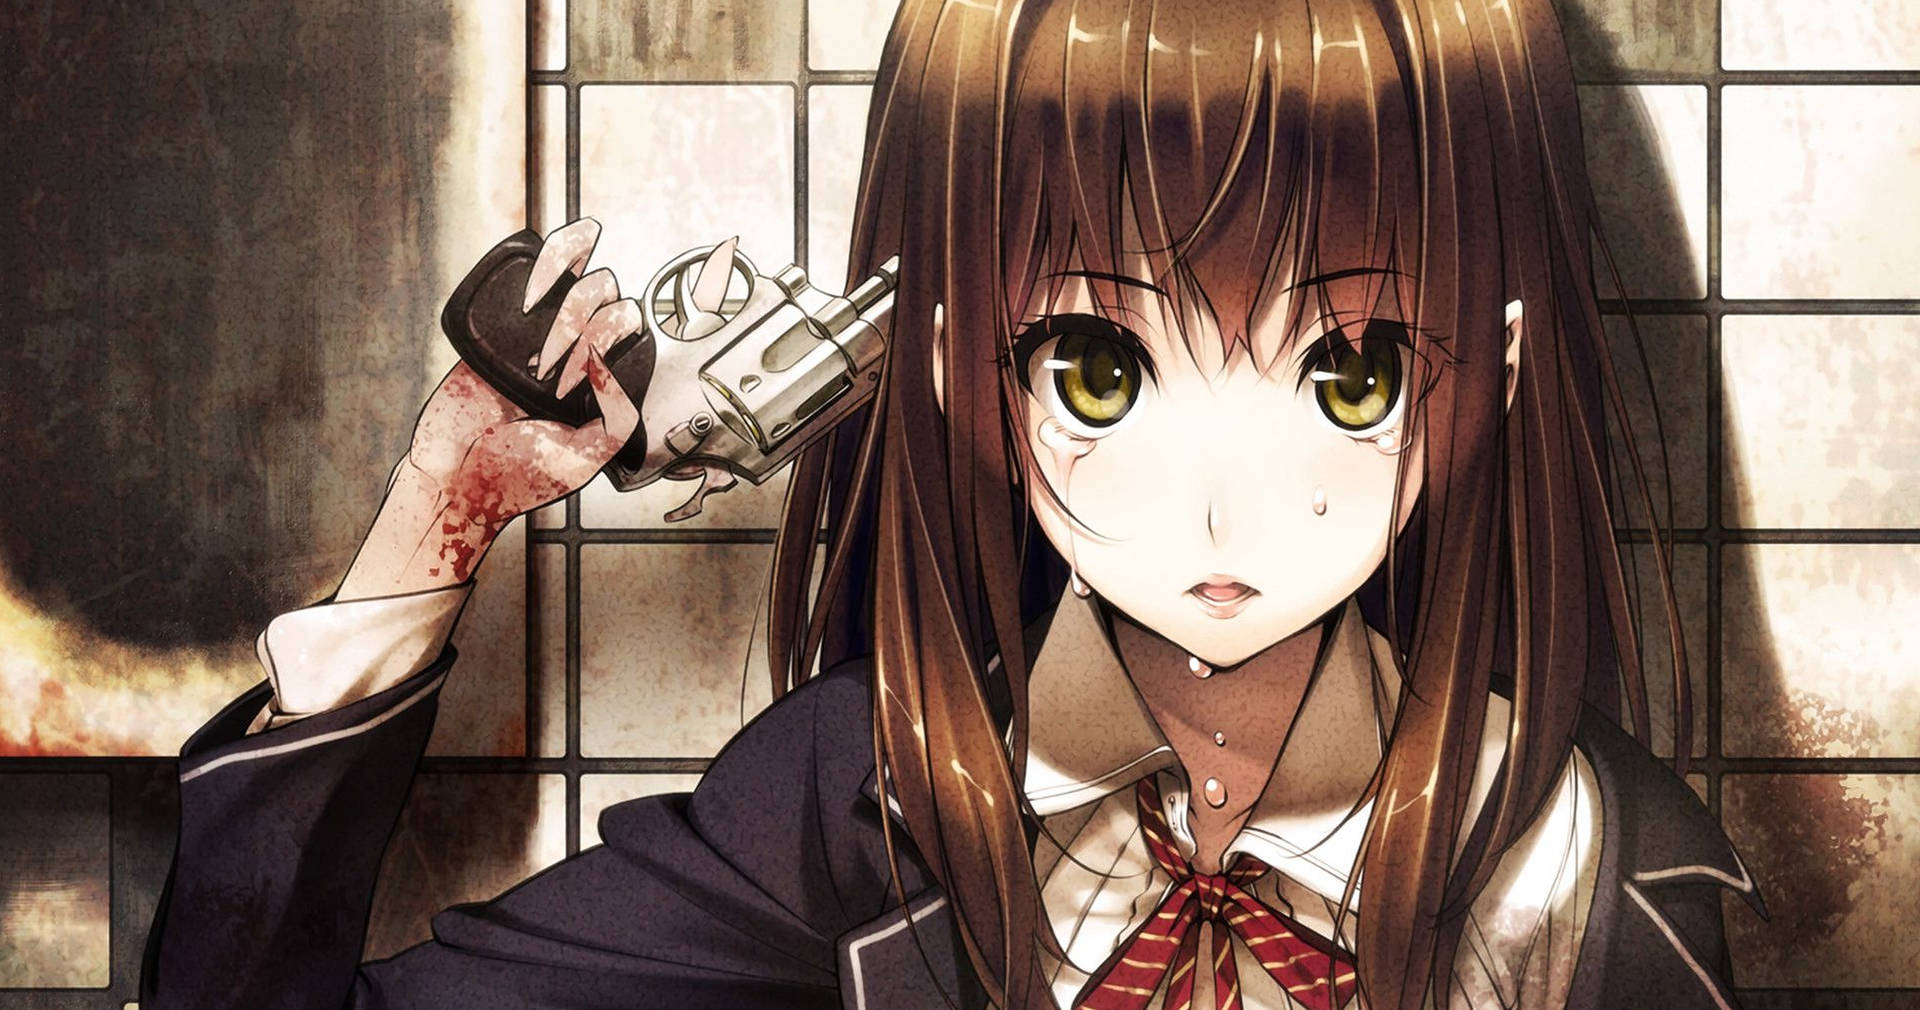 Depressed Anime Girl With Gun Wallpaper